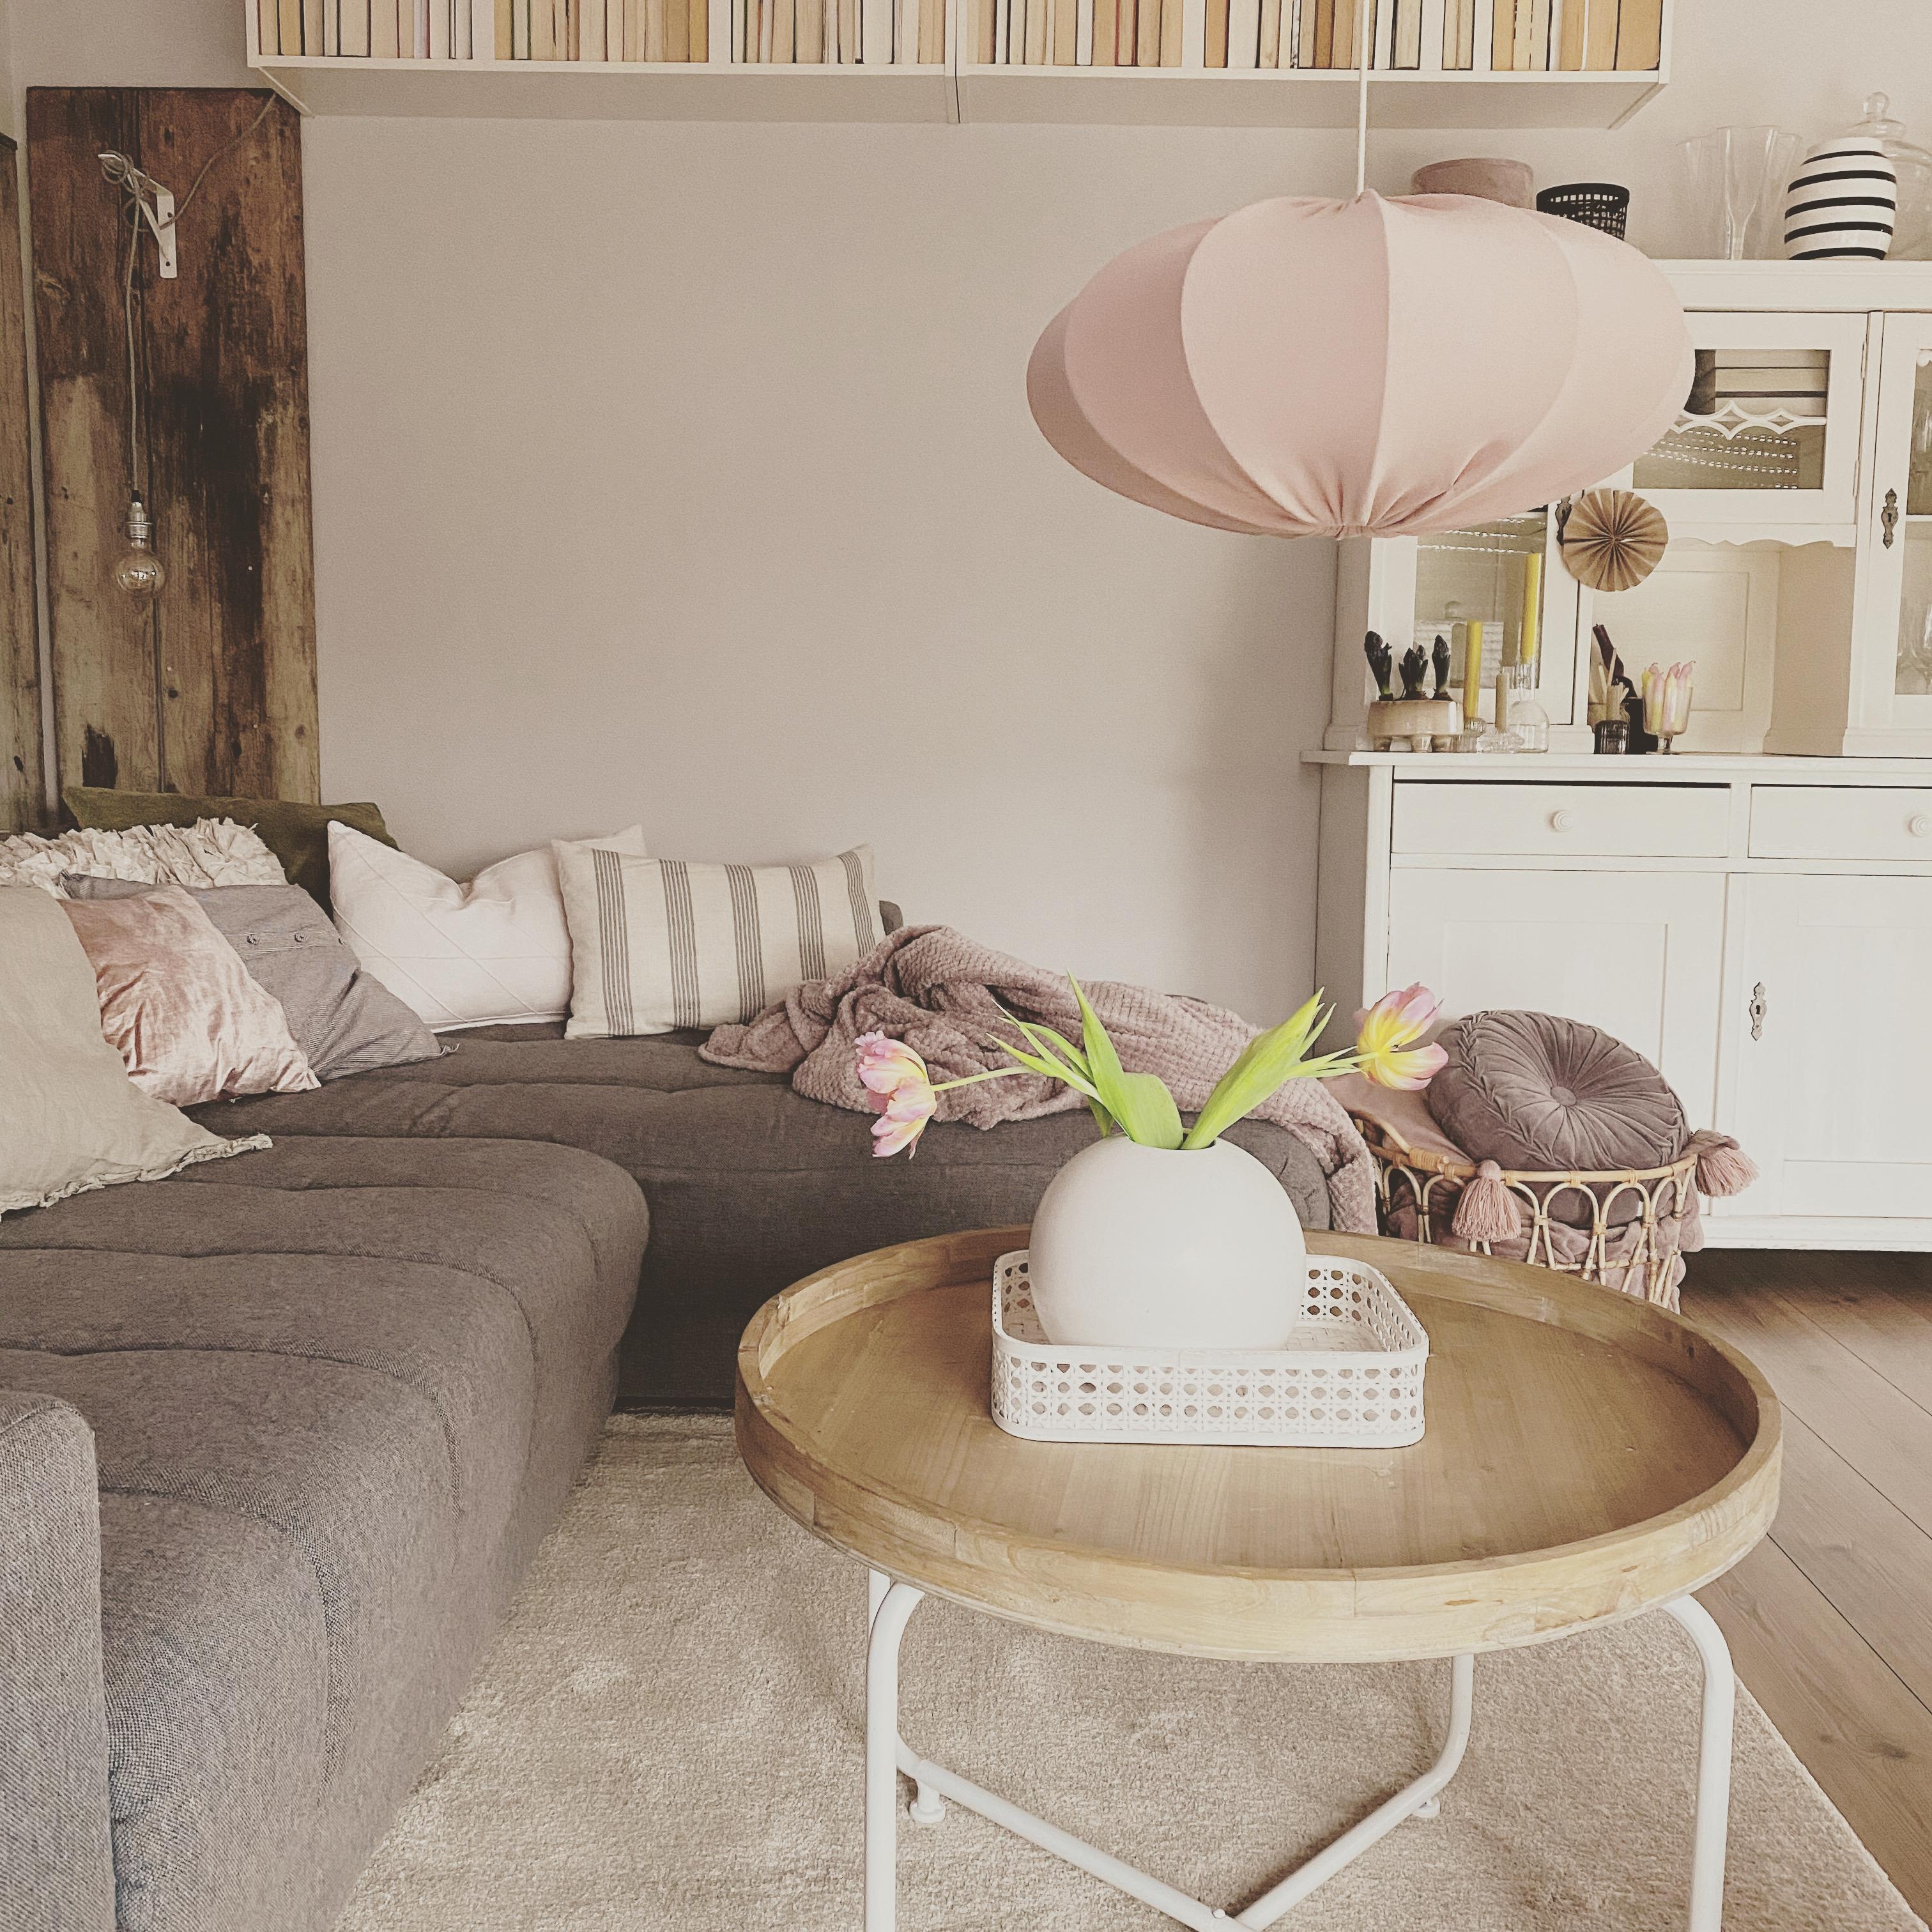 Wohnzimmerinspiration
#buffet#hyggehome#couchstyle#homesweethome#landhausliving